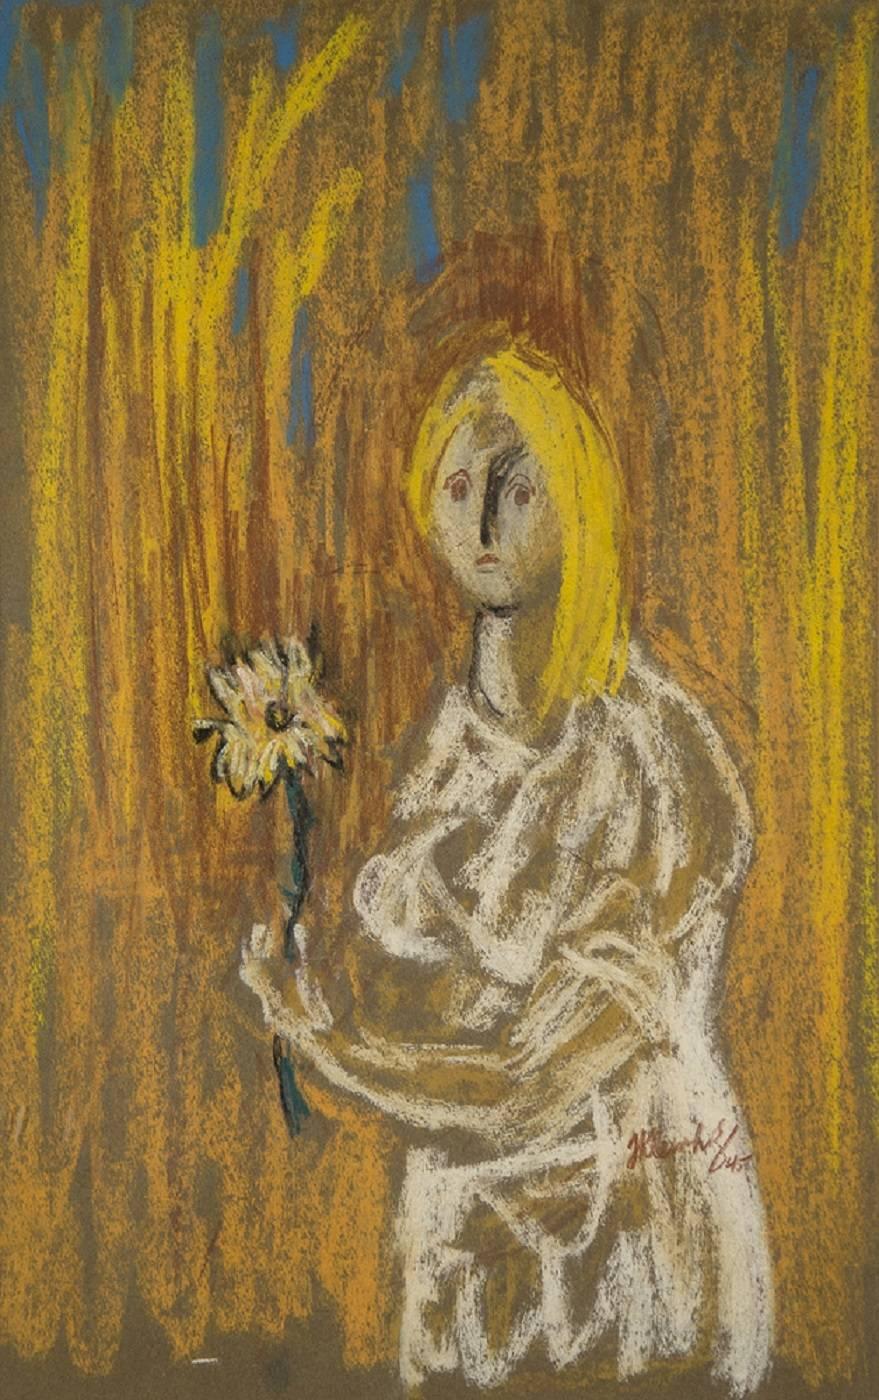 Drawing Girl with Flower (Fille avec fleur) - Art moderniste américain, 1945